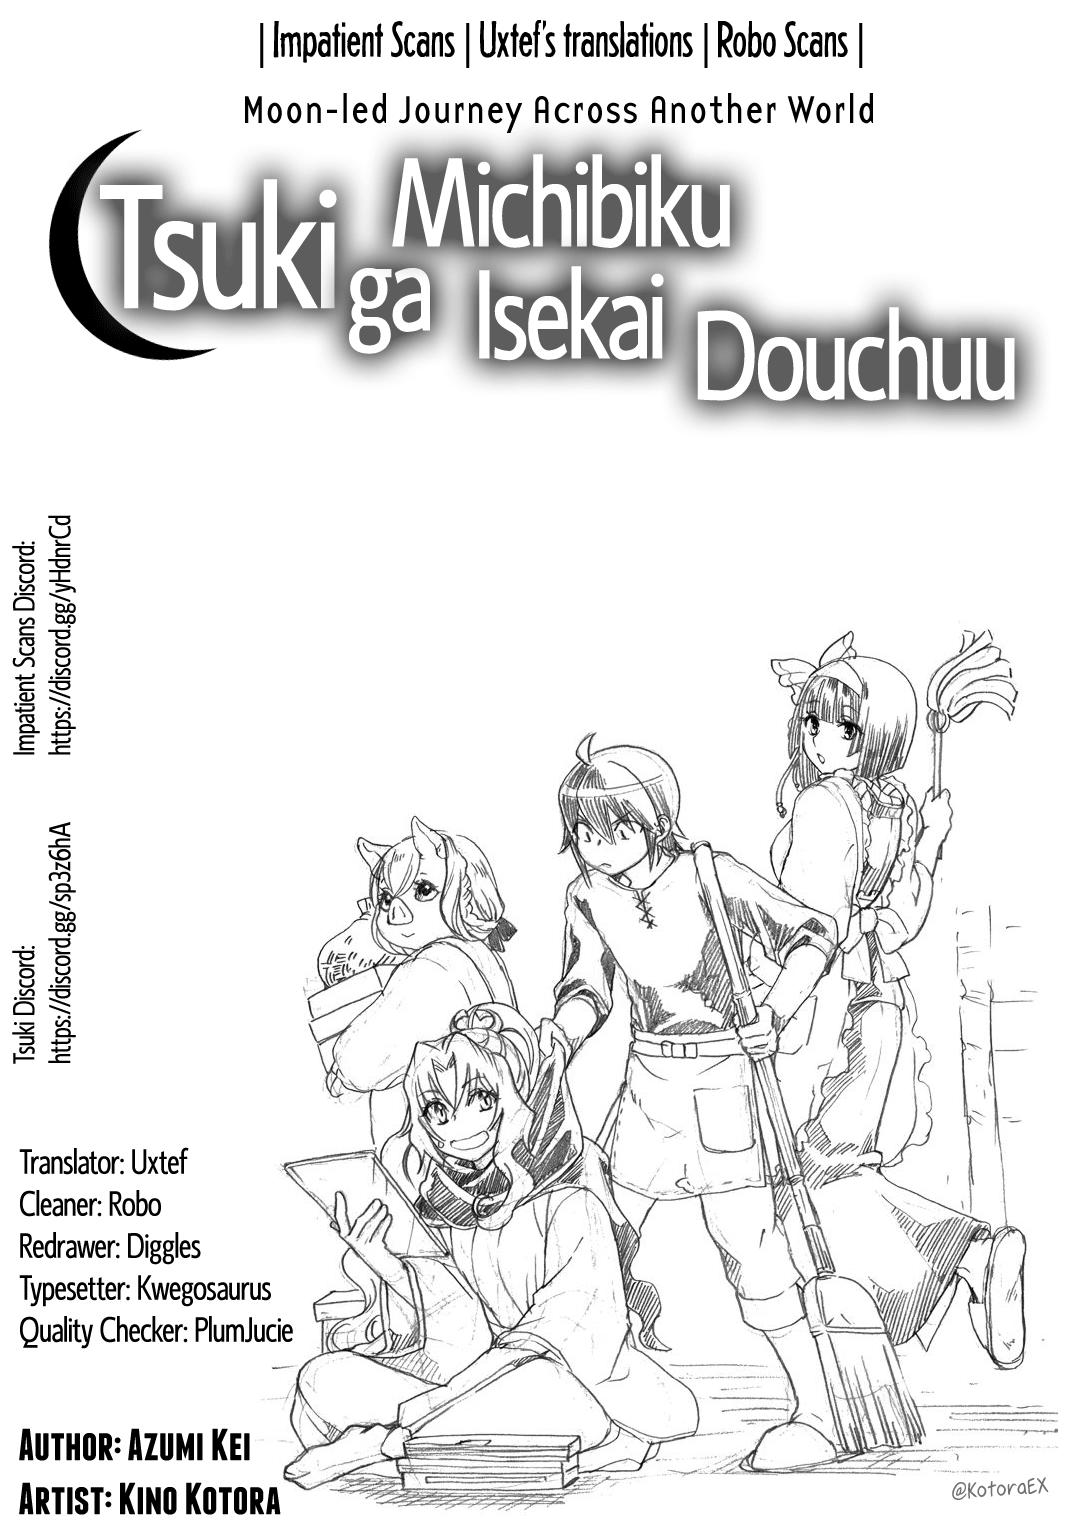 Tsuki ga Michibiku Isekai Douchuu Manga Online English Scans High Quality